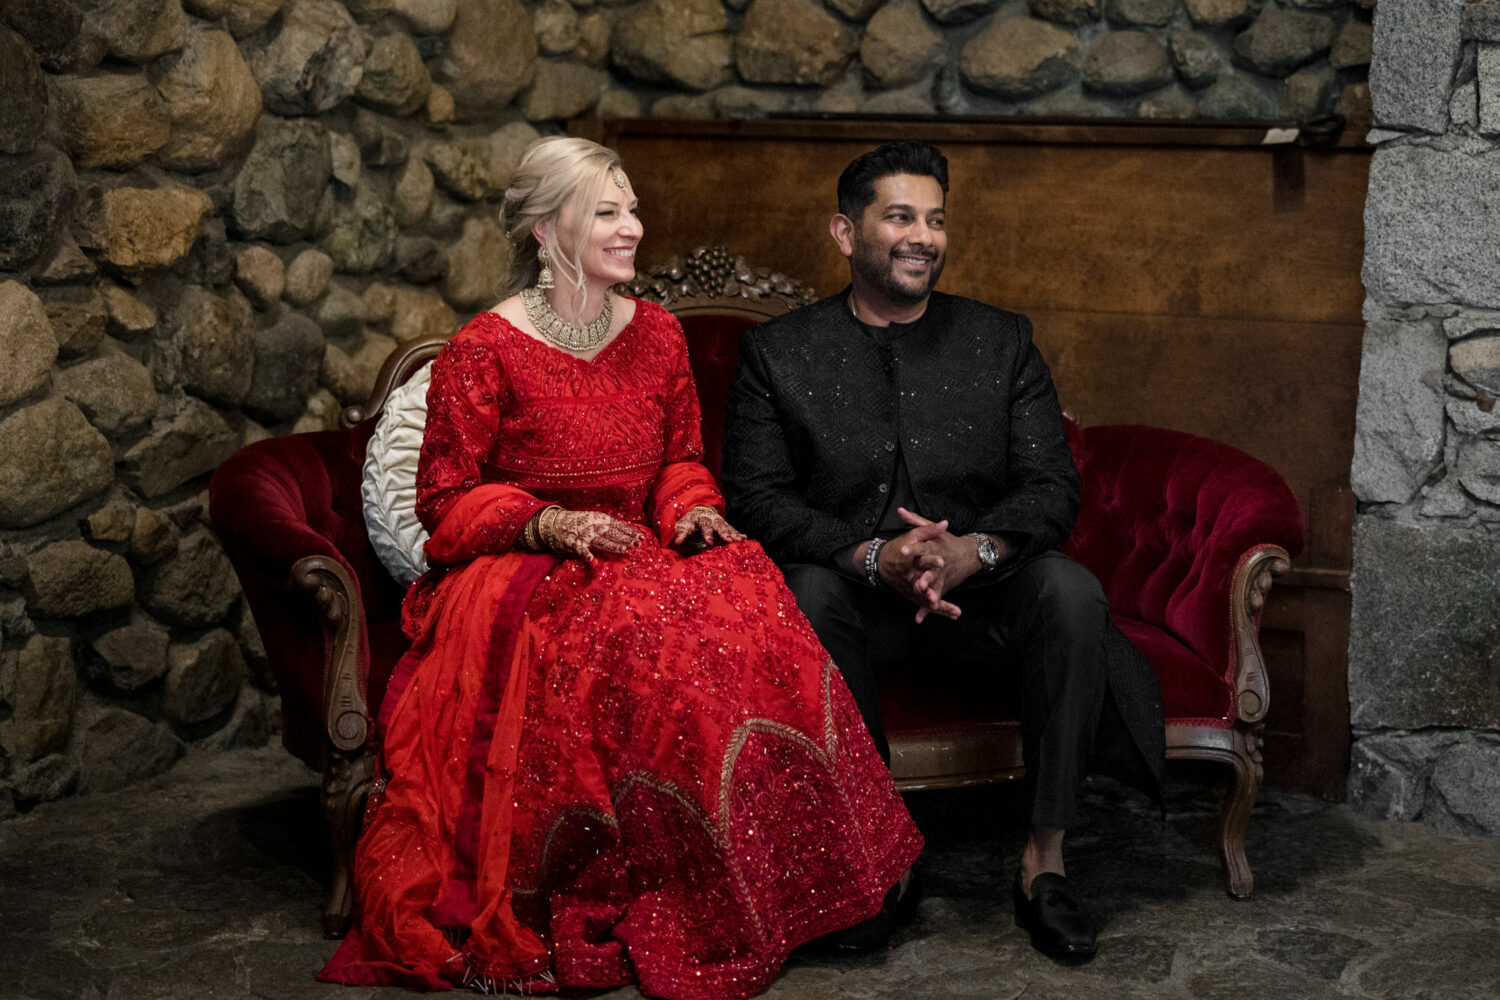 The bride and groom sit on a red velvet sofa during their Muslim wedding in Lake Tahoe.